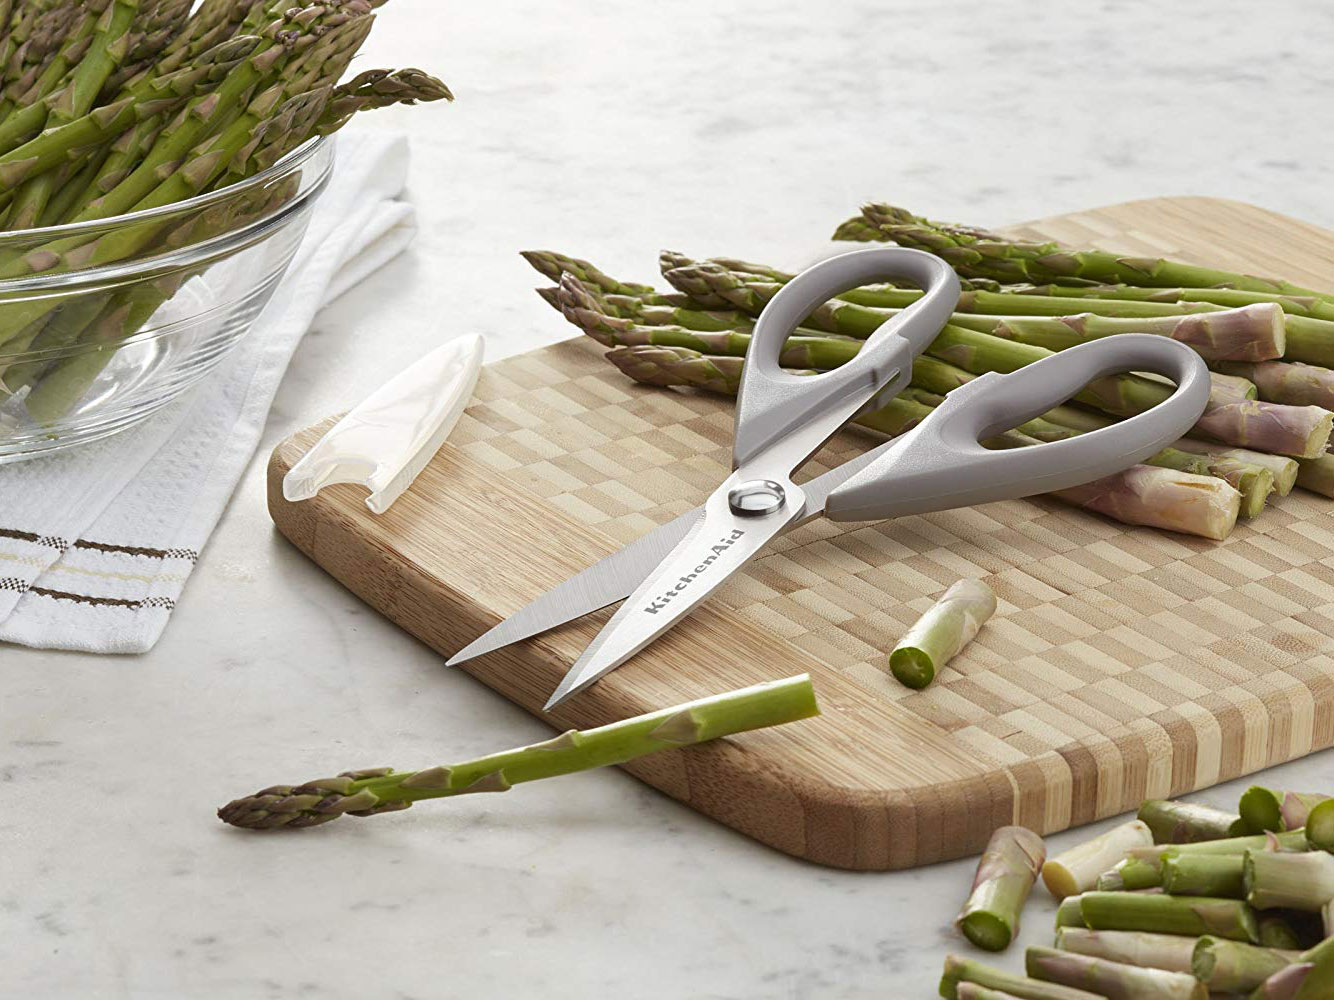 Kitchen shears on a cutting board beside asparagus